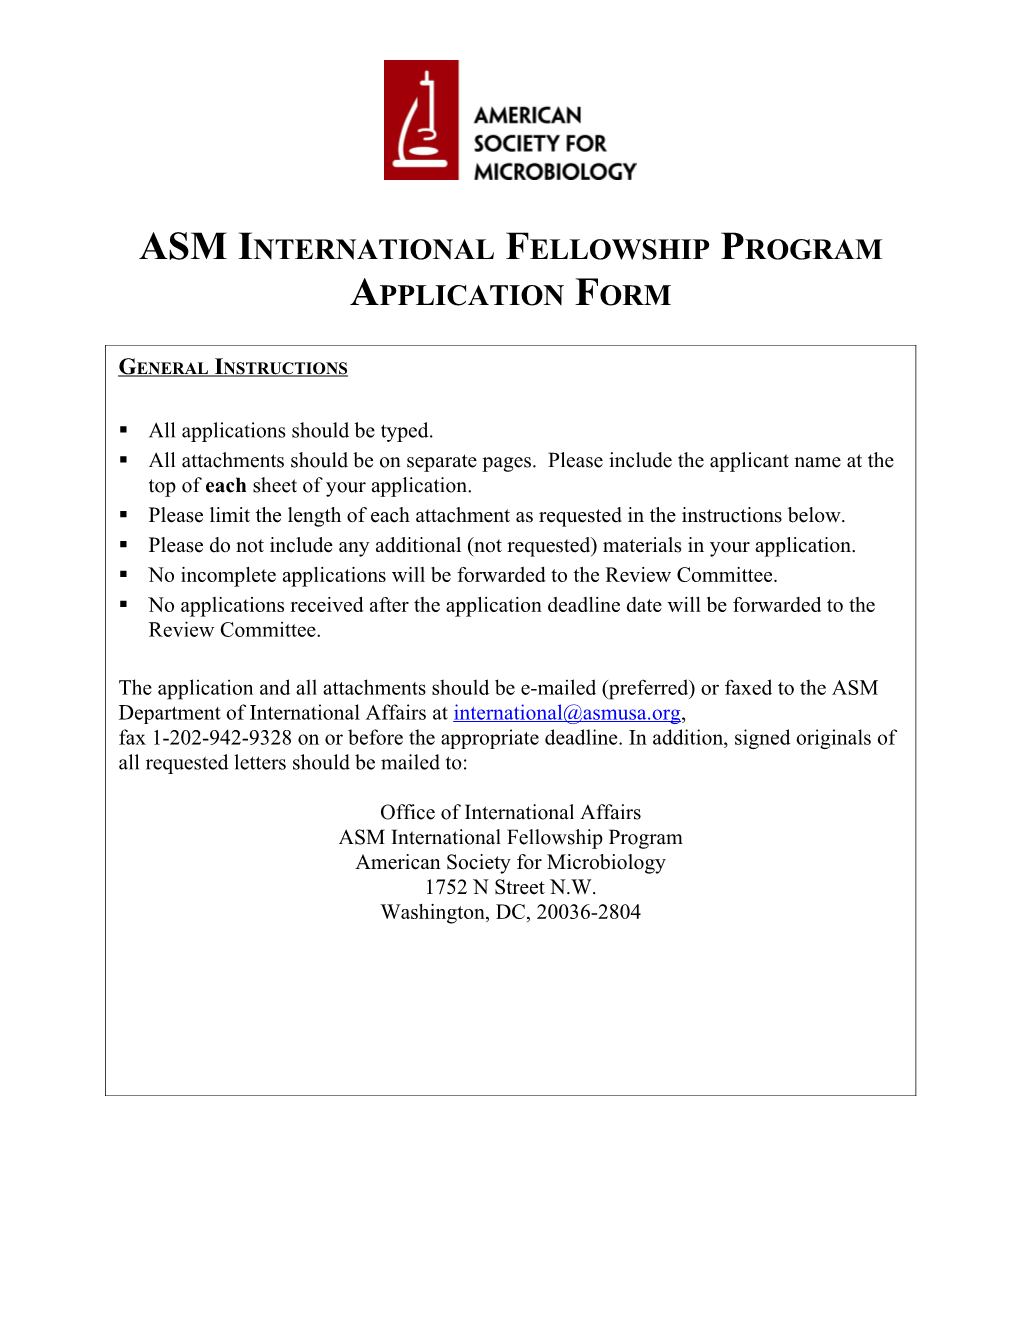 The ASM International Fellowship Program